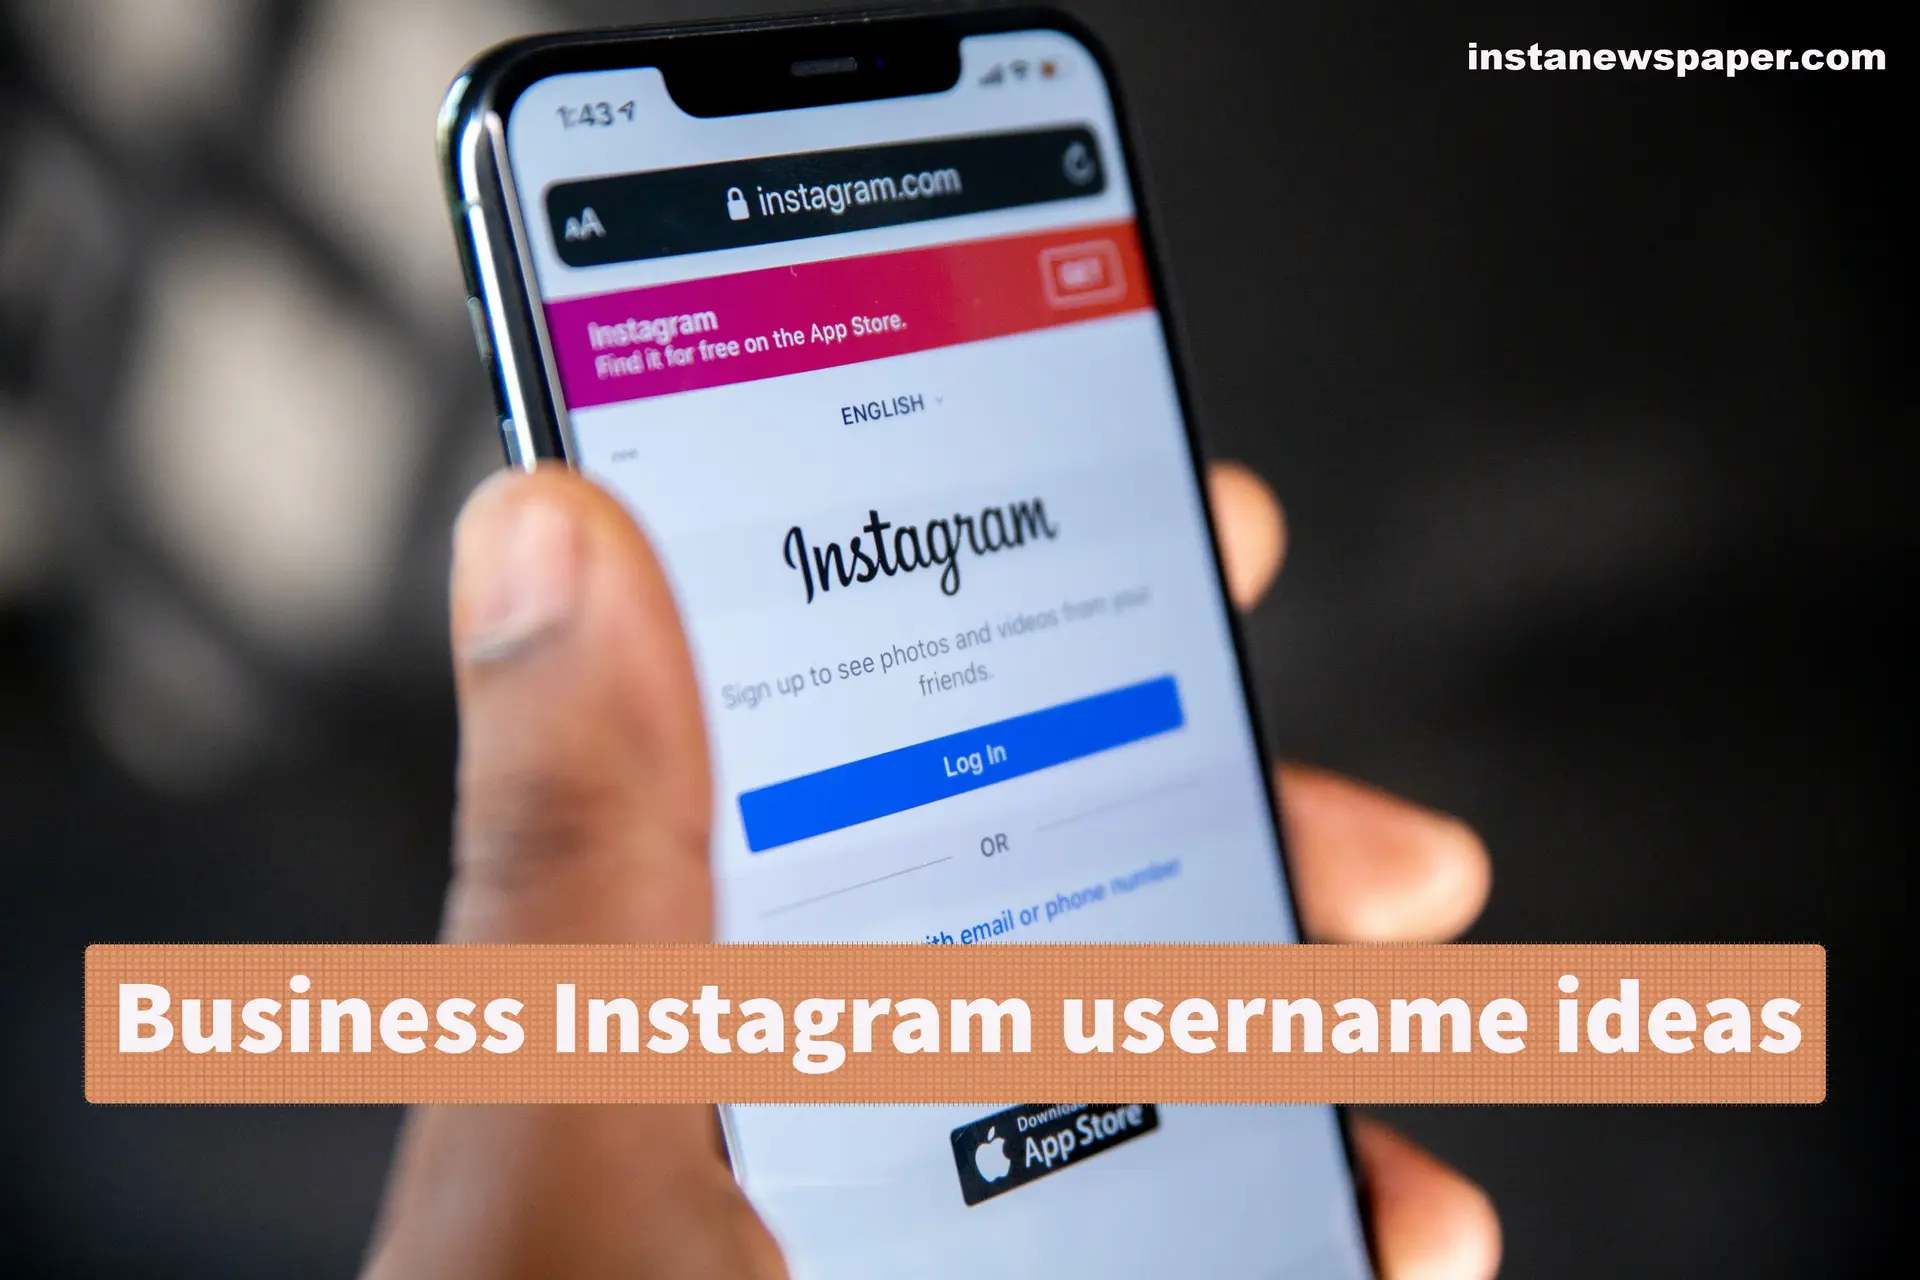 Business Instagram username ideas